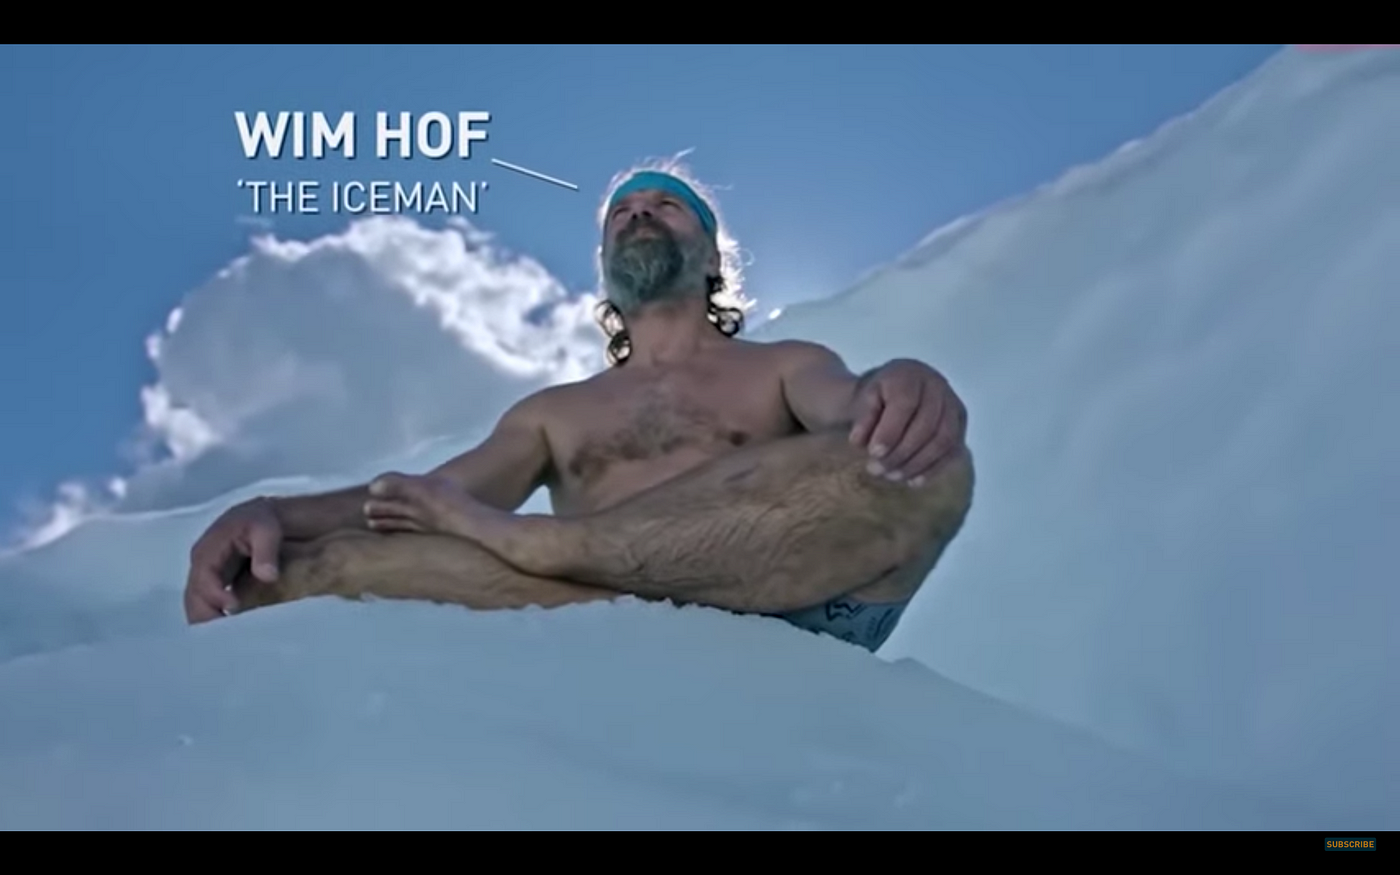 The Wim Hof Method - Meet the Iceman!